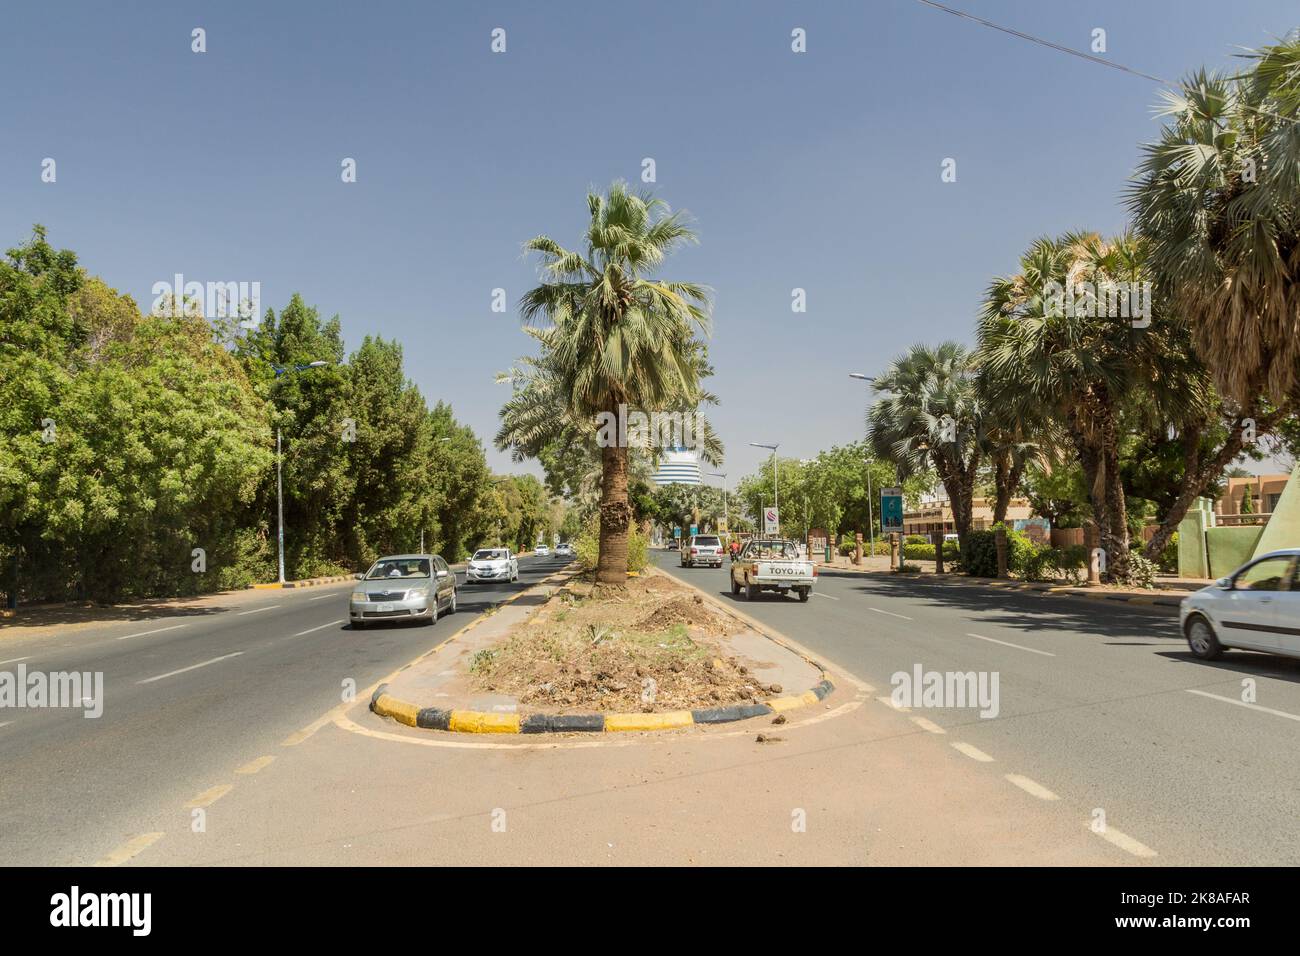 KHARTOUM, SUDAN - MARCH 7, 2019: View of Nile street in Khartoum, capital of Sudan Stock Photo